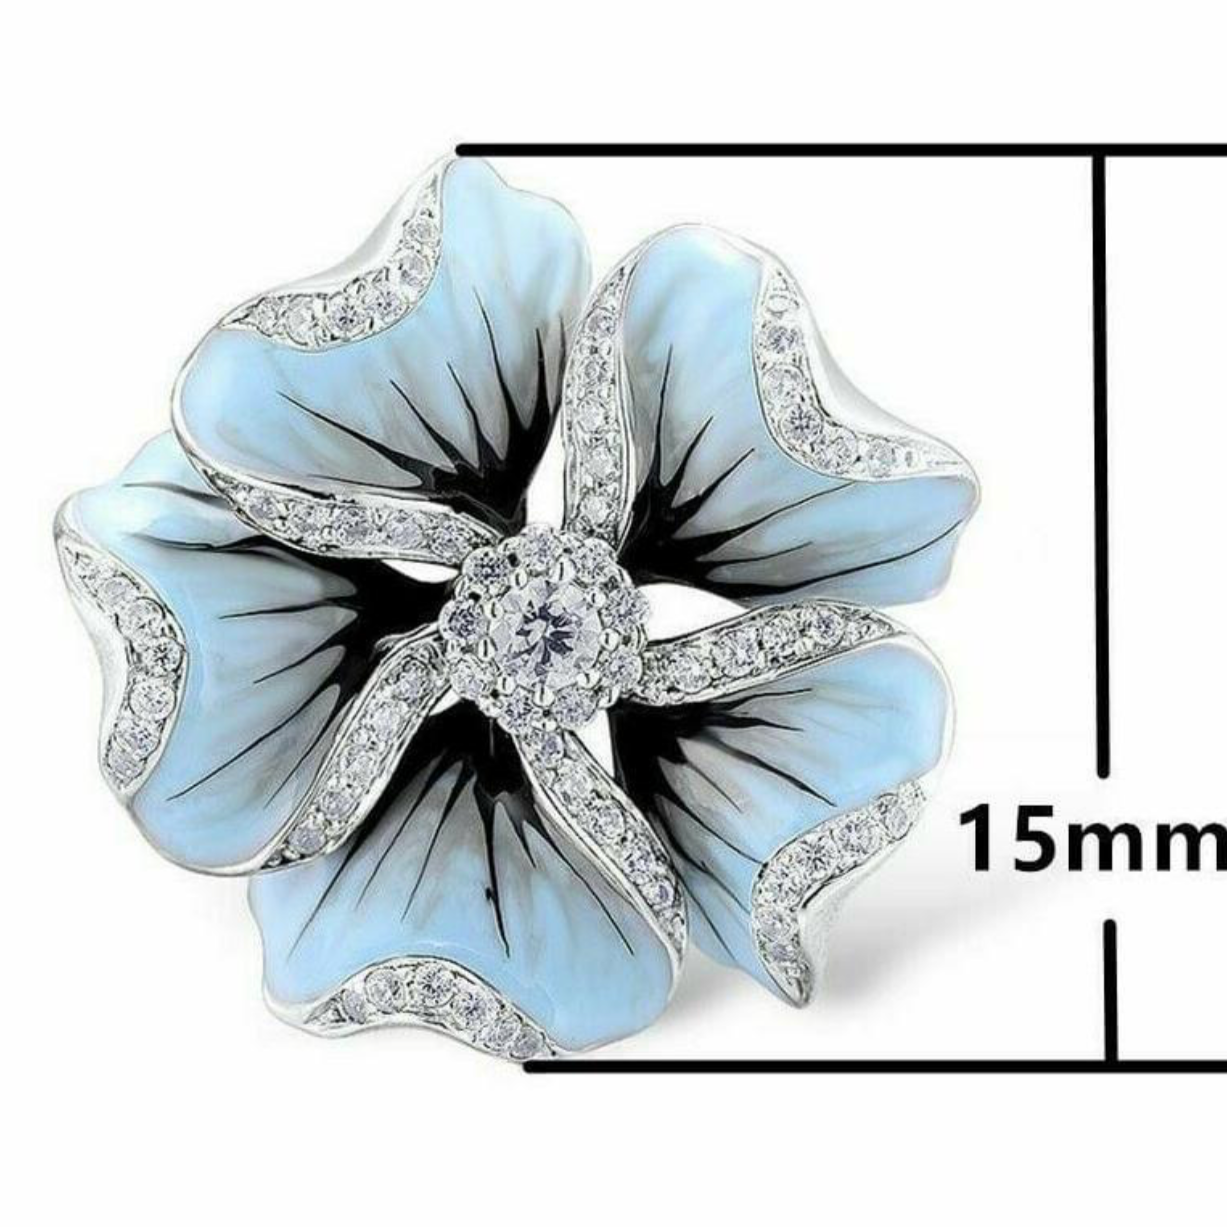 Gorgeous 925 Silver Pastel Blue Sapphire Encrusted Flower Earrings